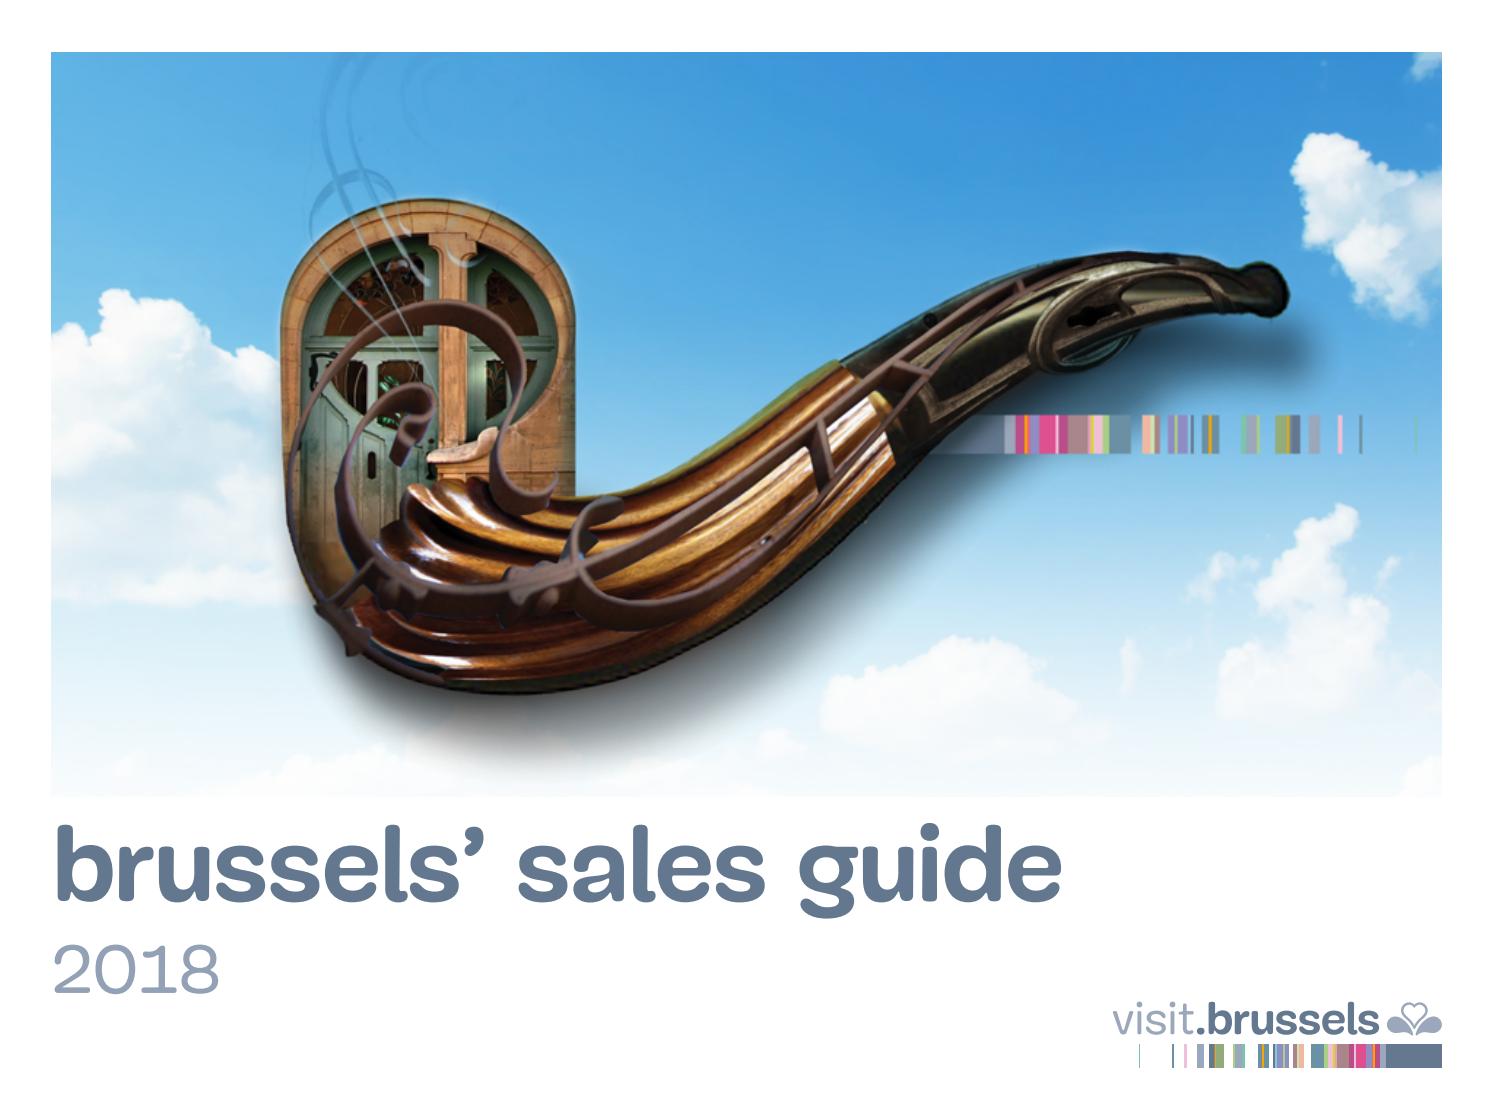 Salon De Jardin Vert Inspirant Brussels Sales Guide 2018 by Visitussels issuu